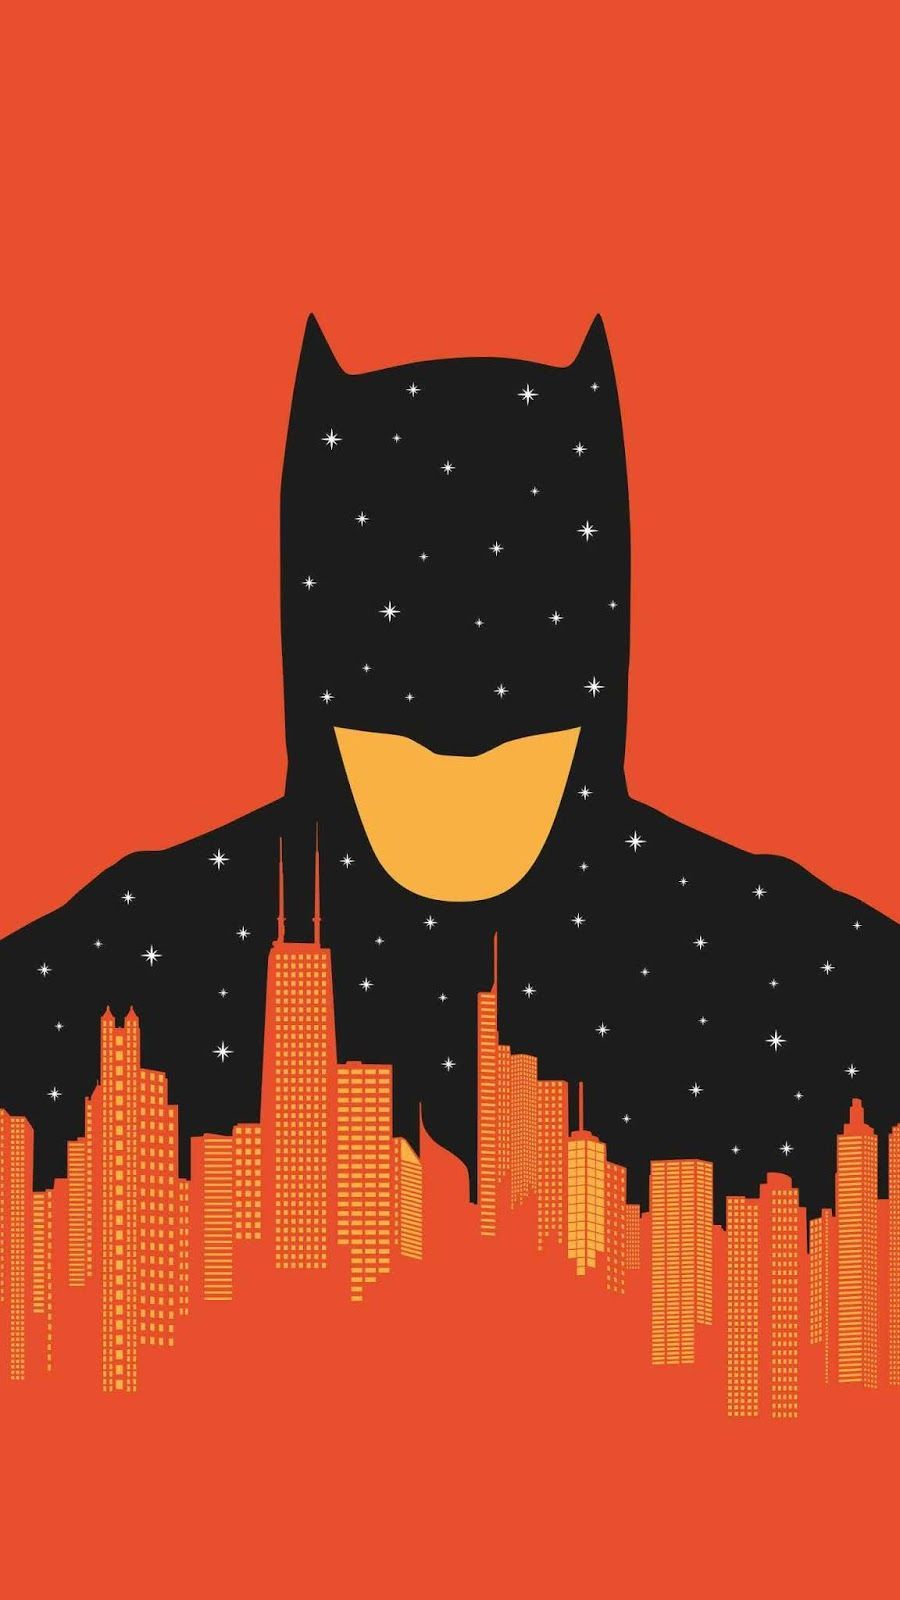 Dark Knight Art Wallpaper. Batman wallpaper, Superhero wallpaper, Batman poster